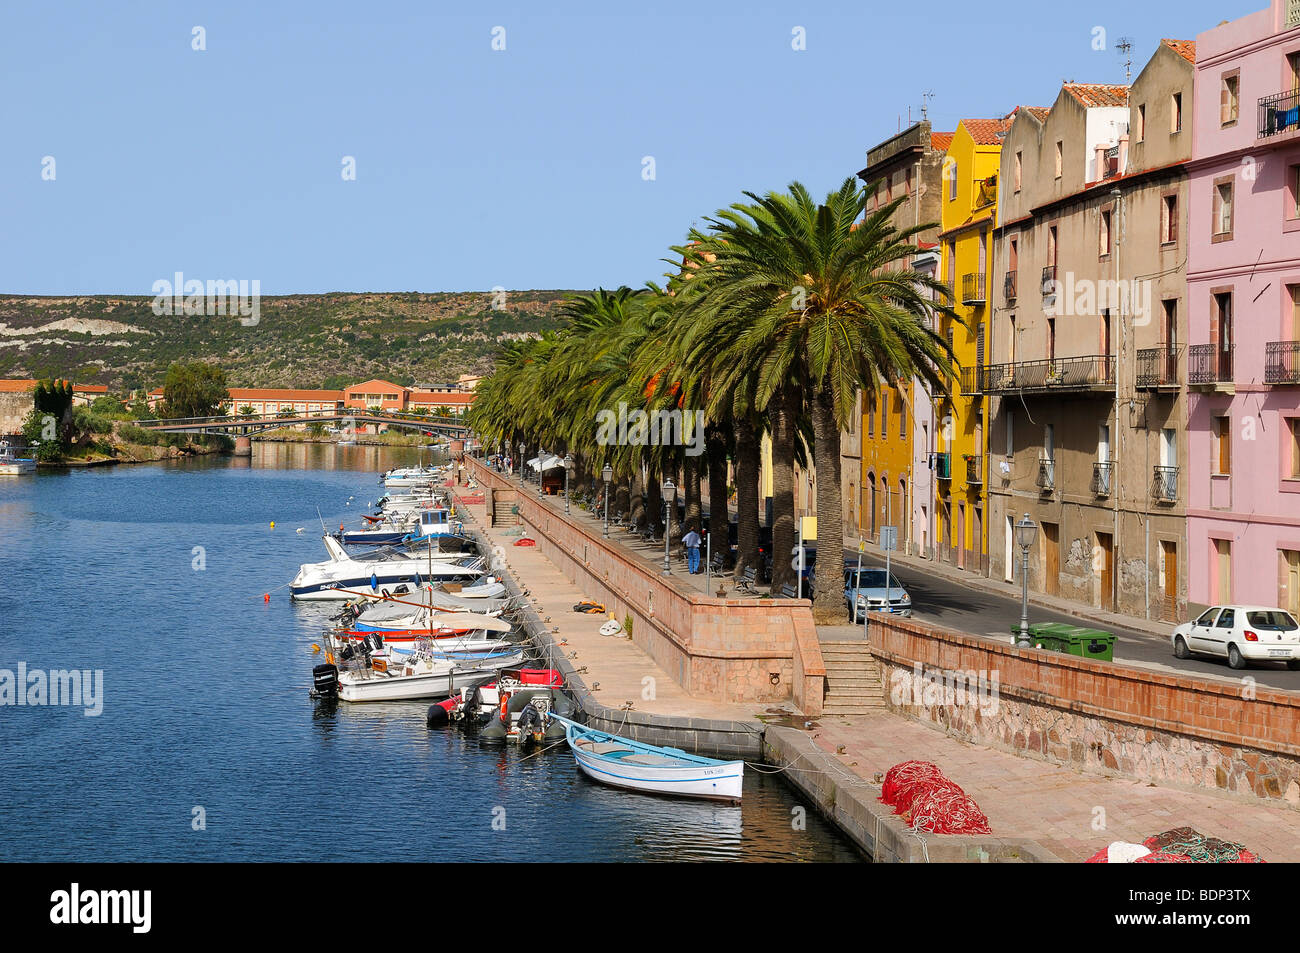 Boats on the river Temo and the historic town centre of Bosa, palm trees along the promenade, Bosa, Oristano, Sardinia, Italy,  Stock Photo